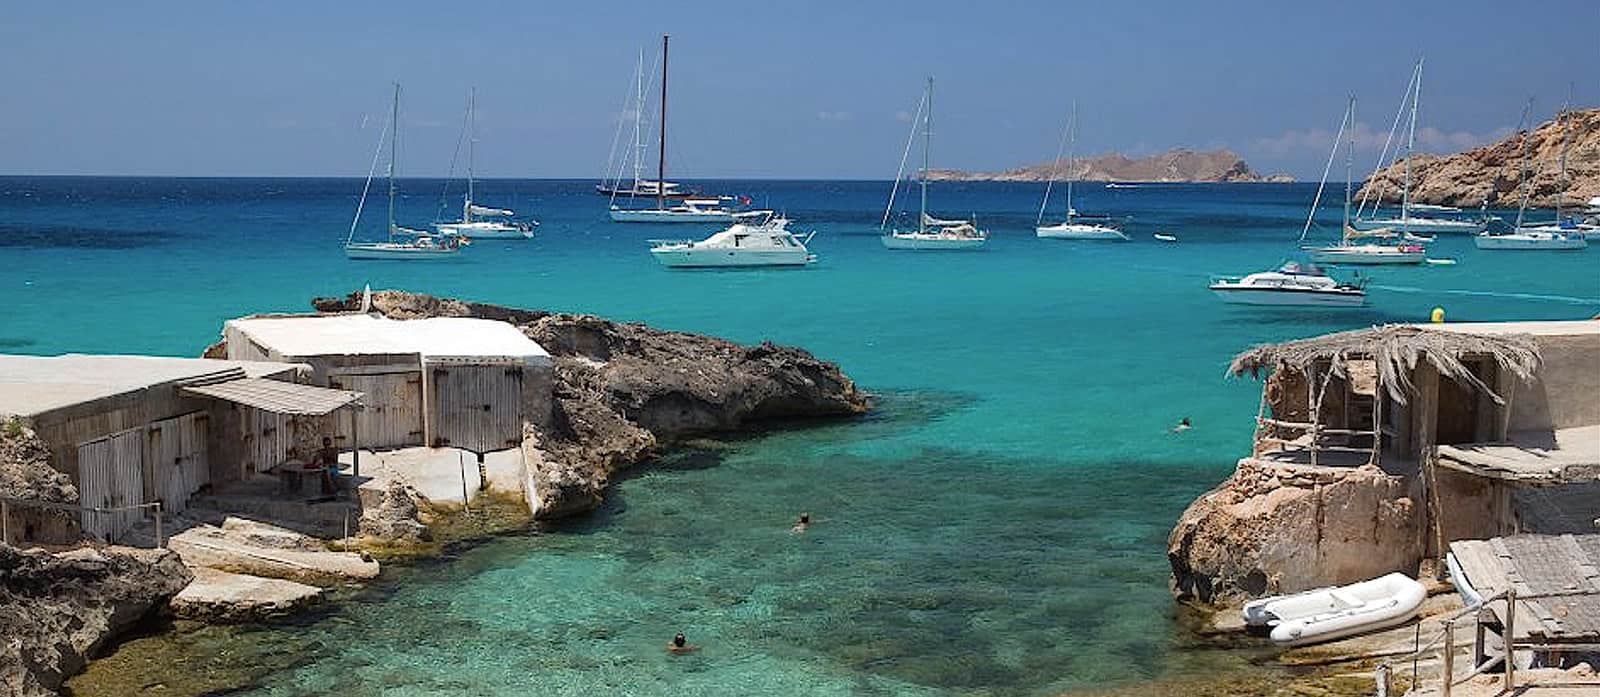 Location journée catamaran Ibiza, Cala Tarida